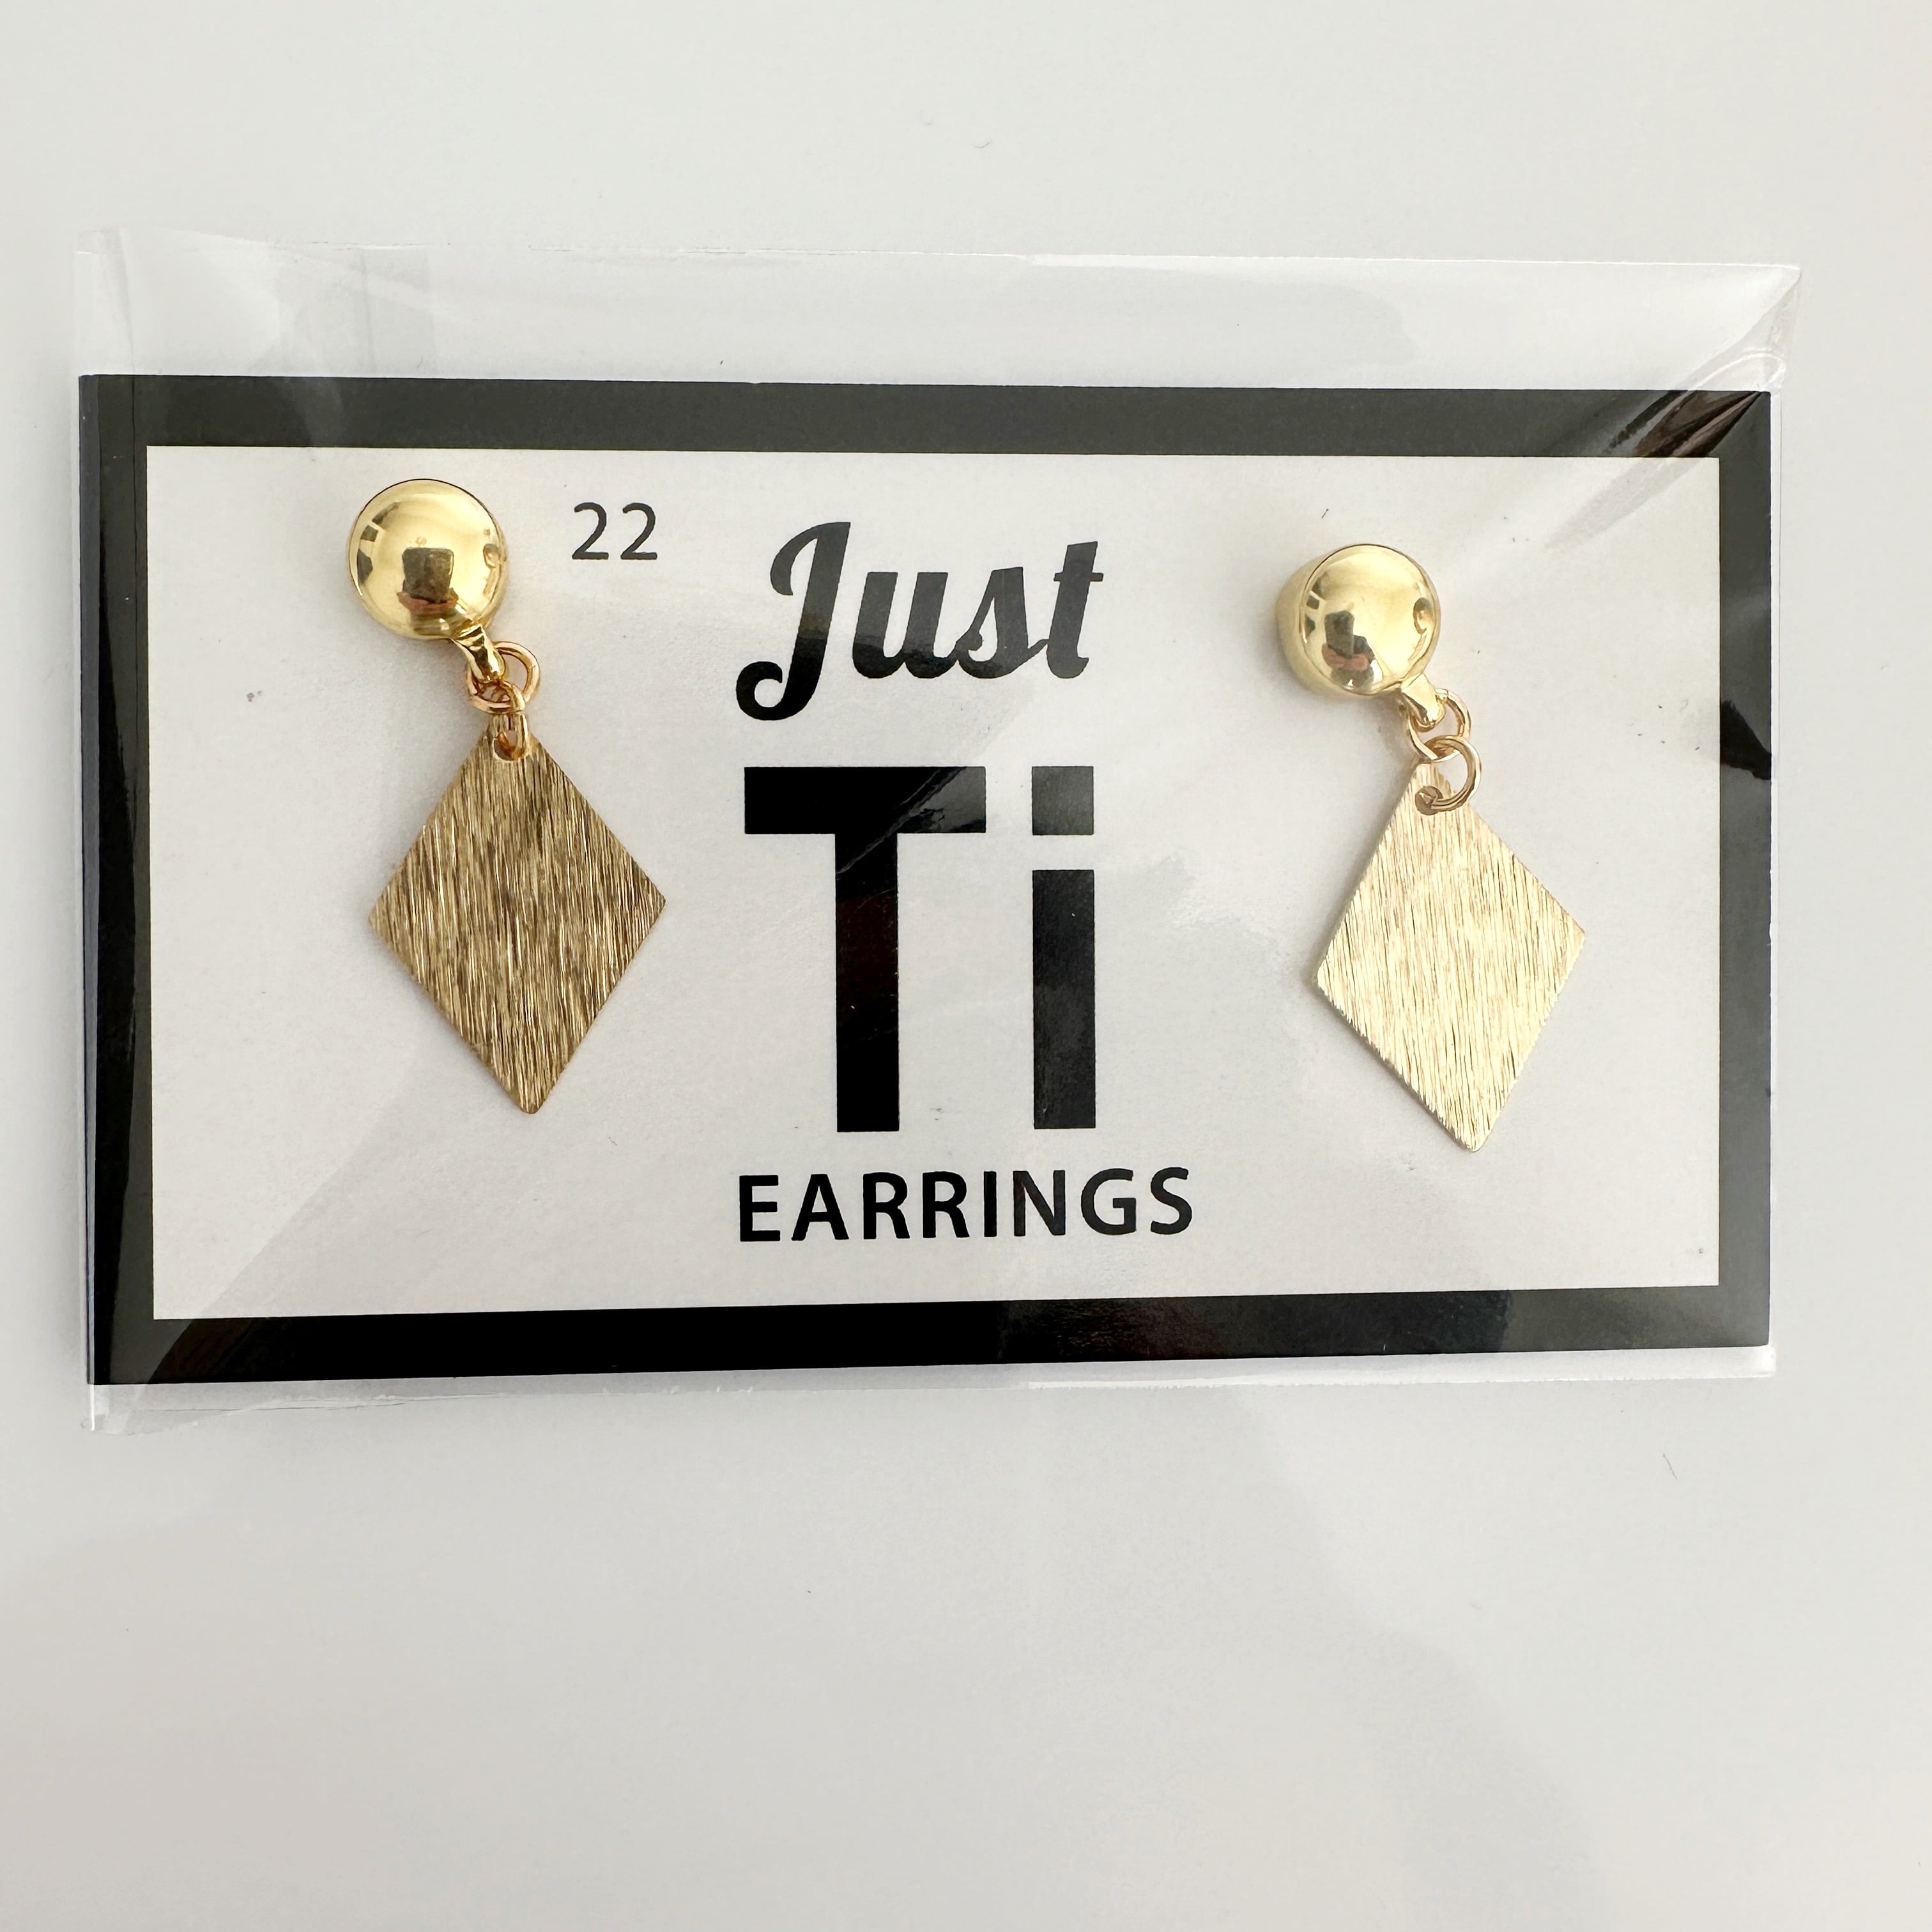 TI-GO Brushed Rhombus Golden Earrings